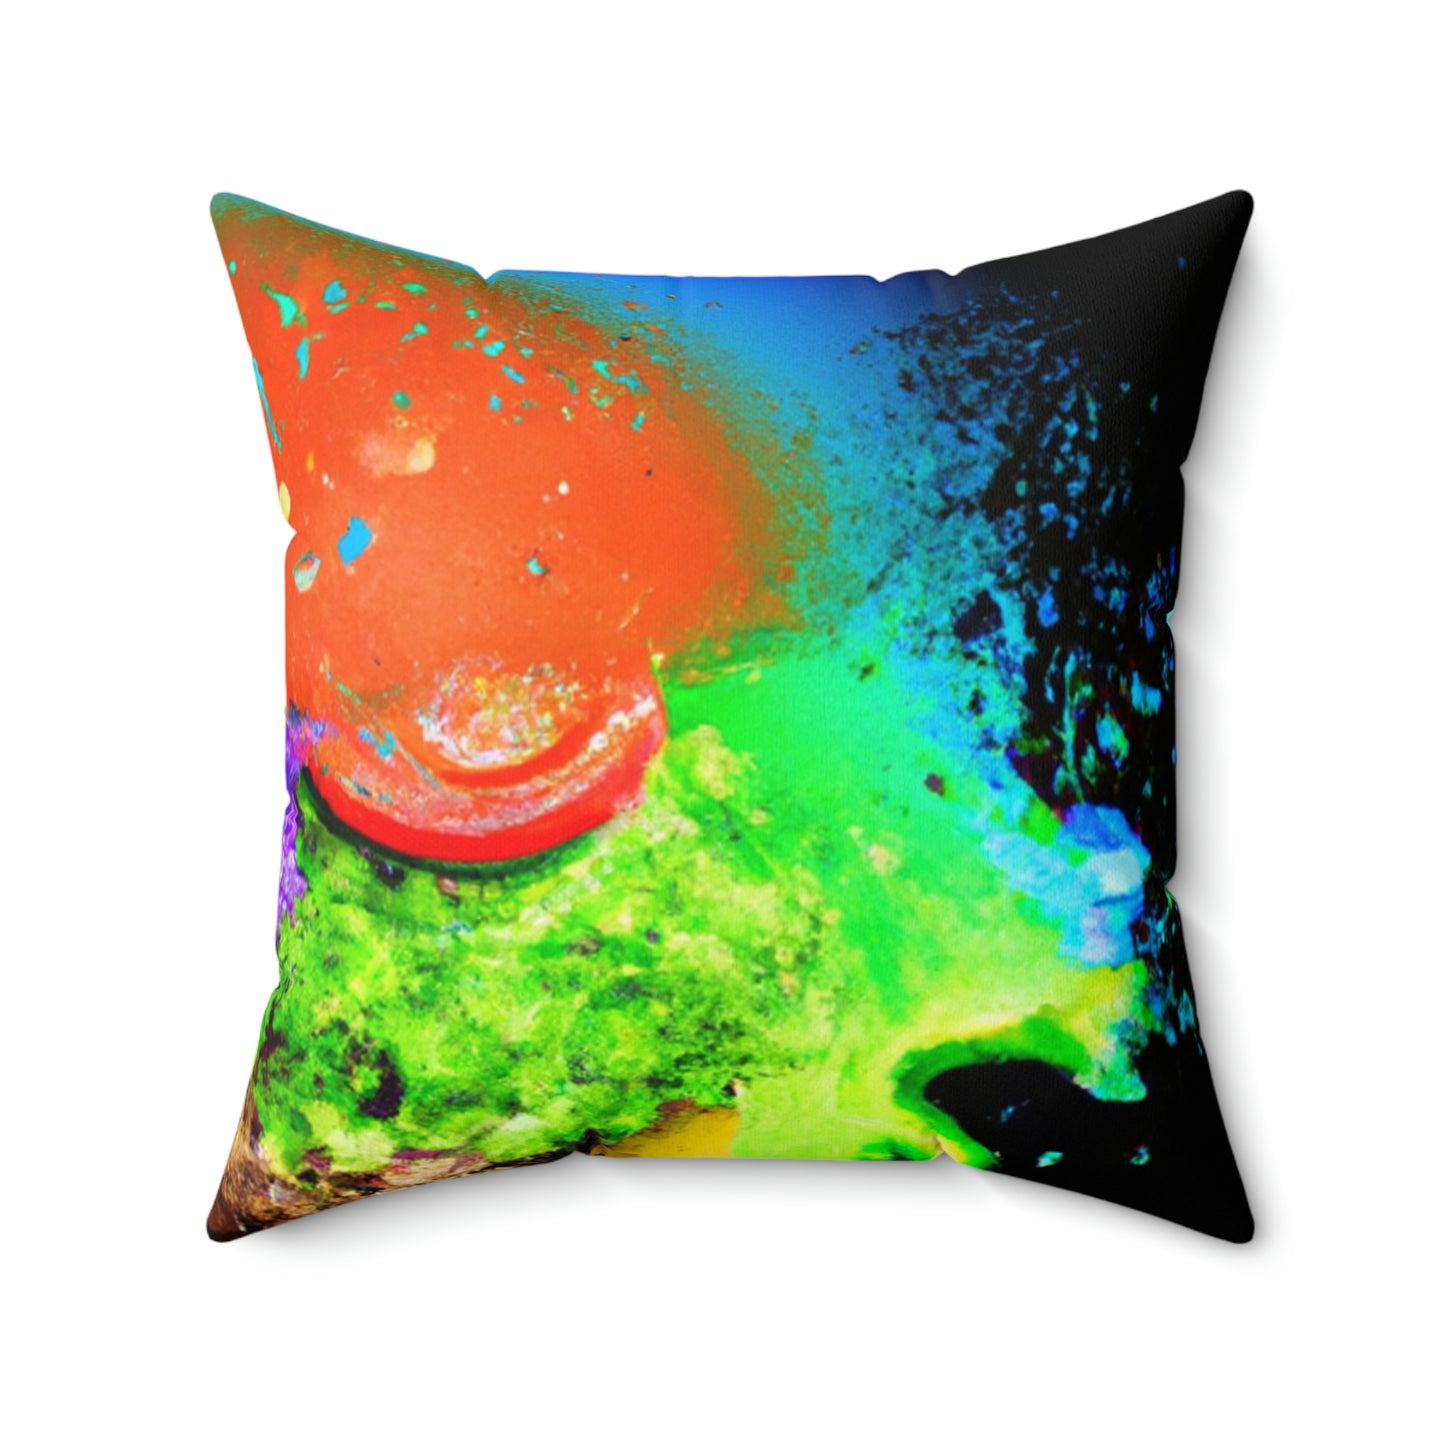 "Burger Rainbow" - The Alien Square Pillow